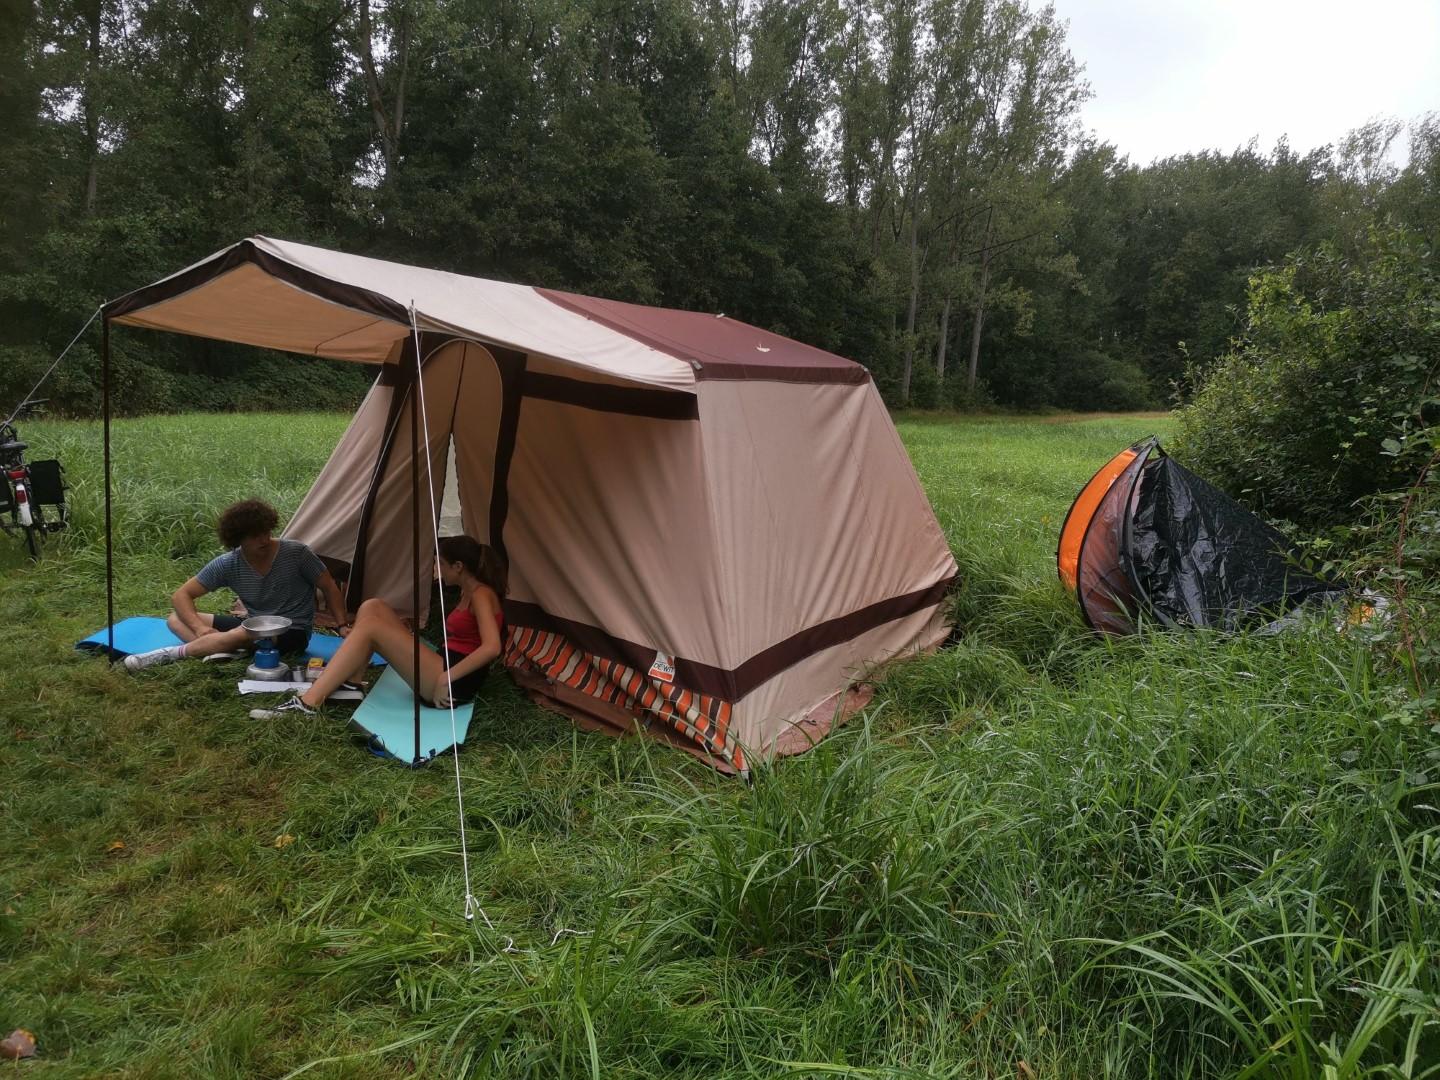 campingtrip